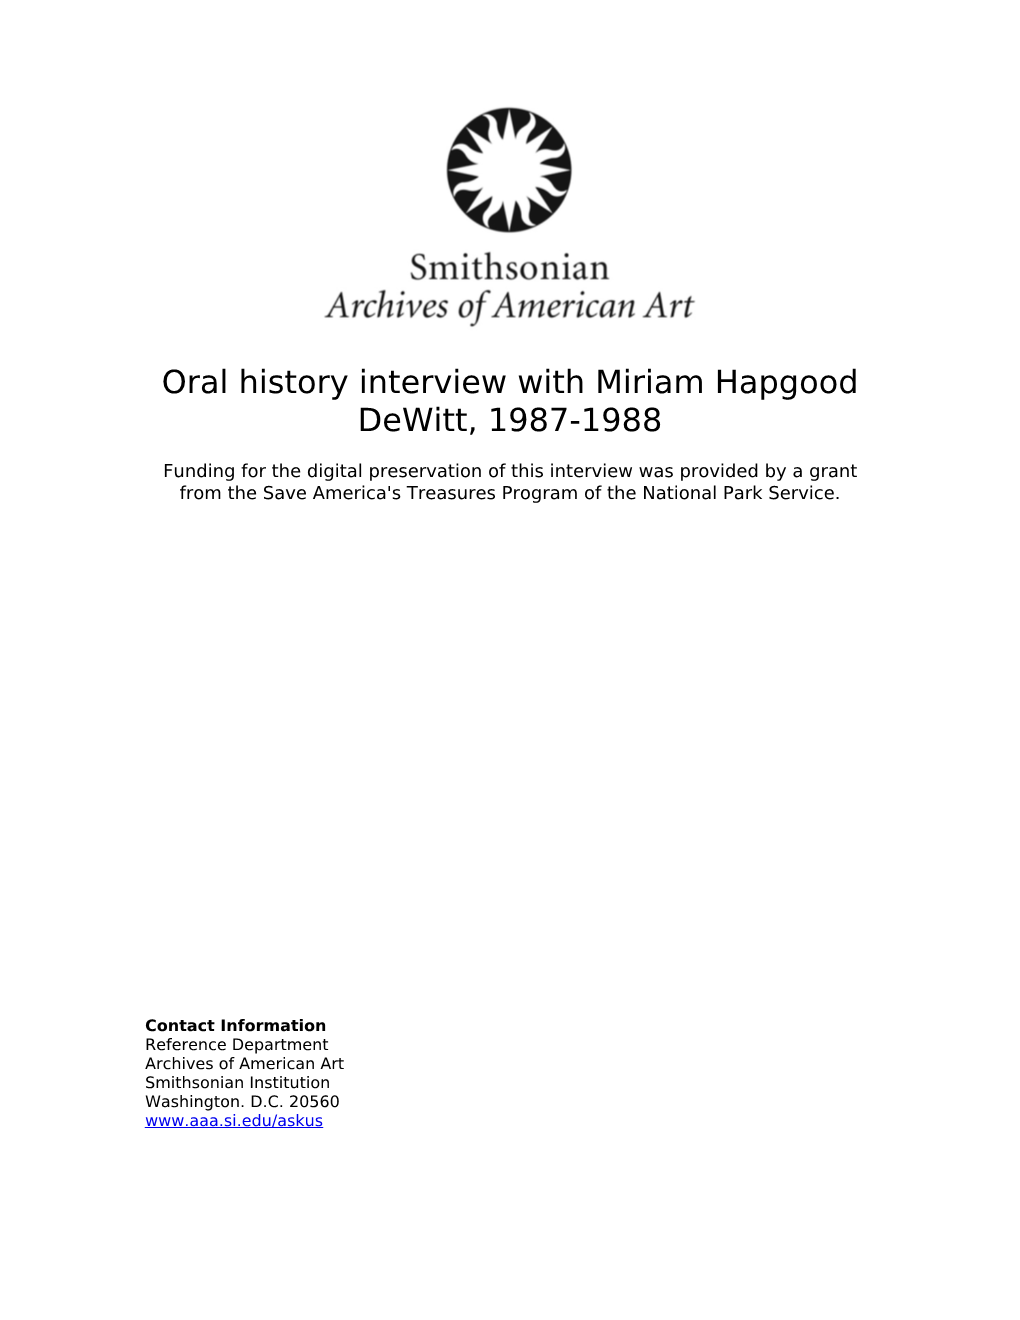 Oral History Interview with Miriam Hapgood Dewitt, 1987-1988